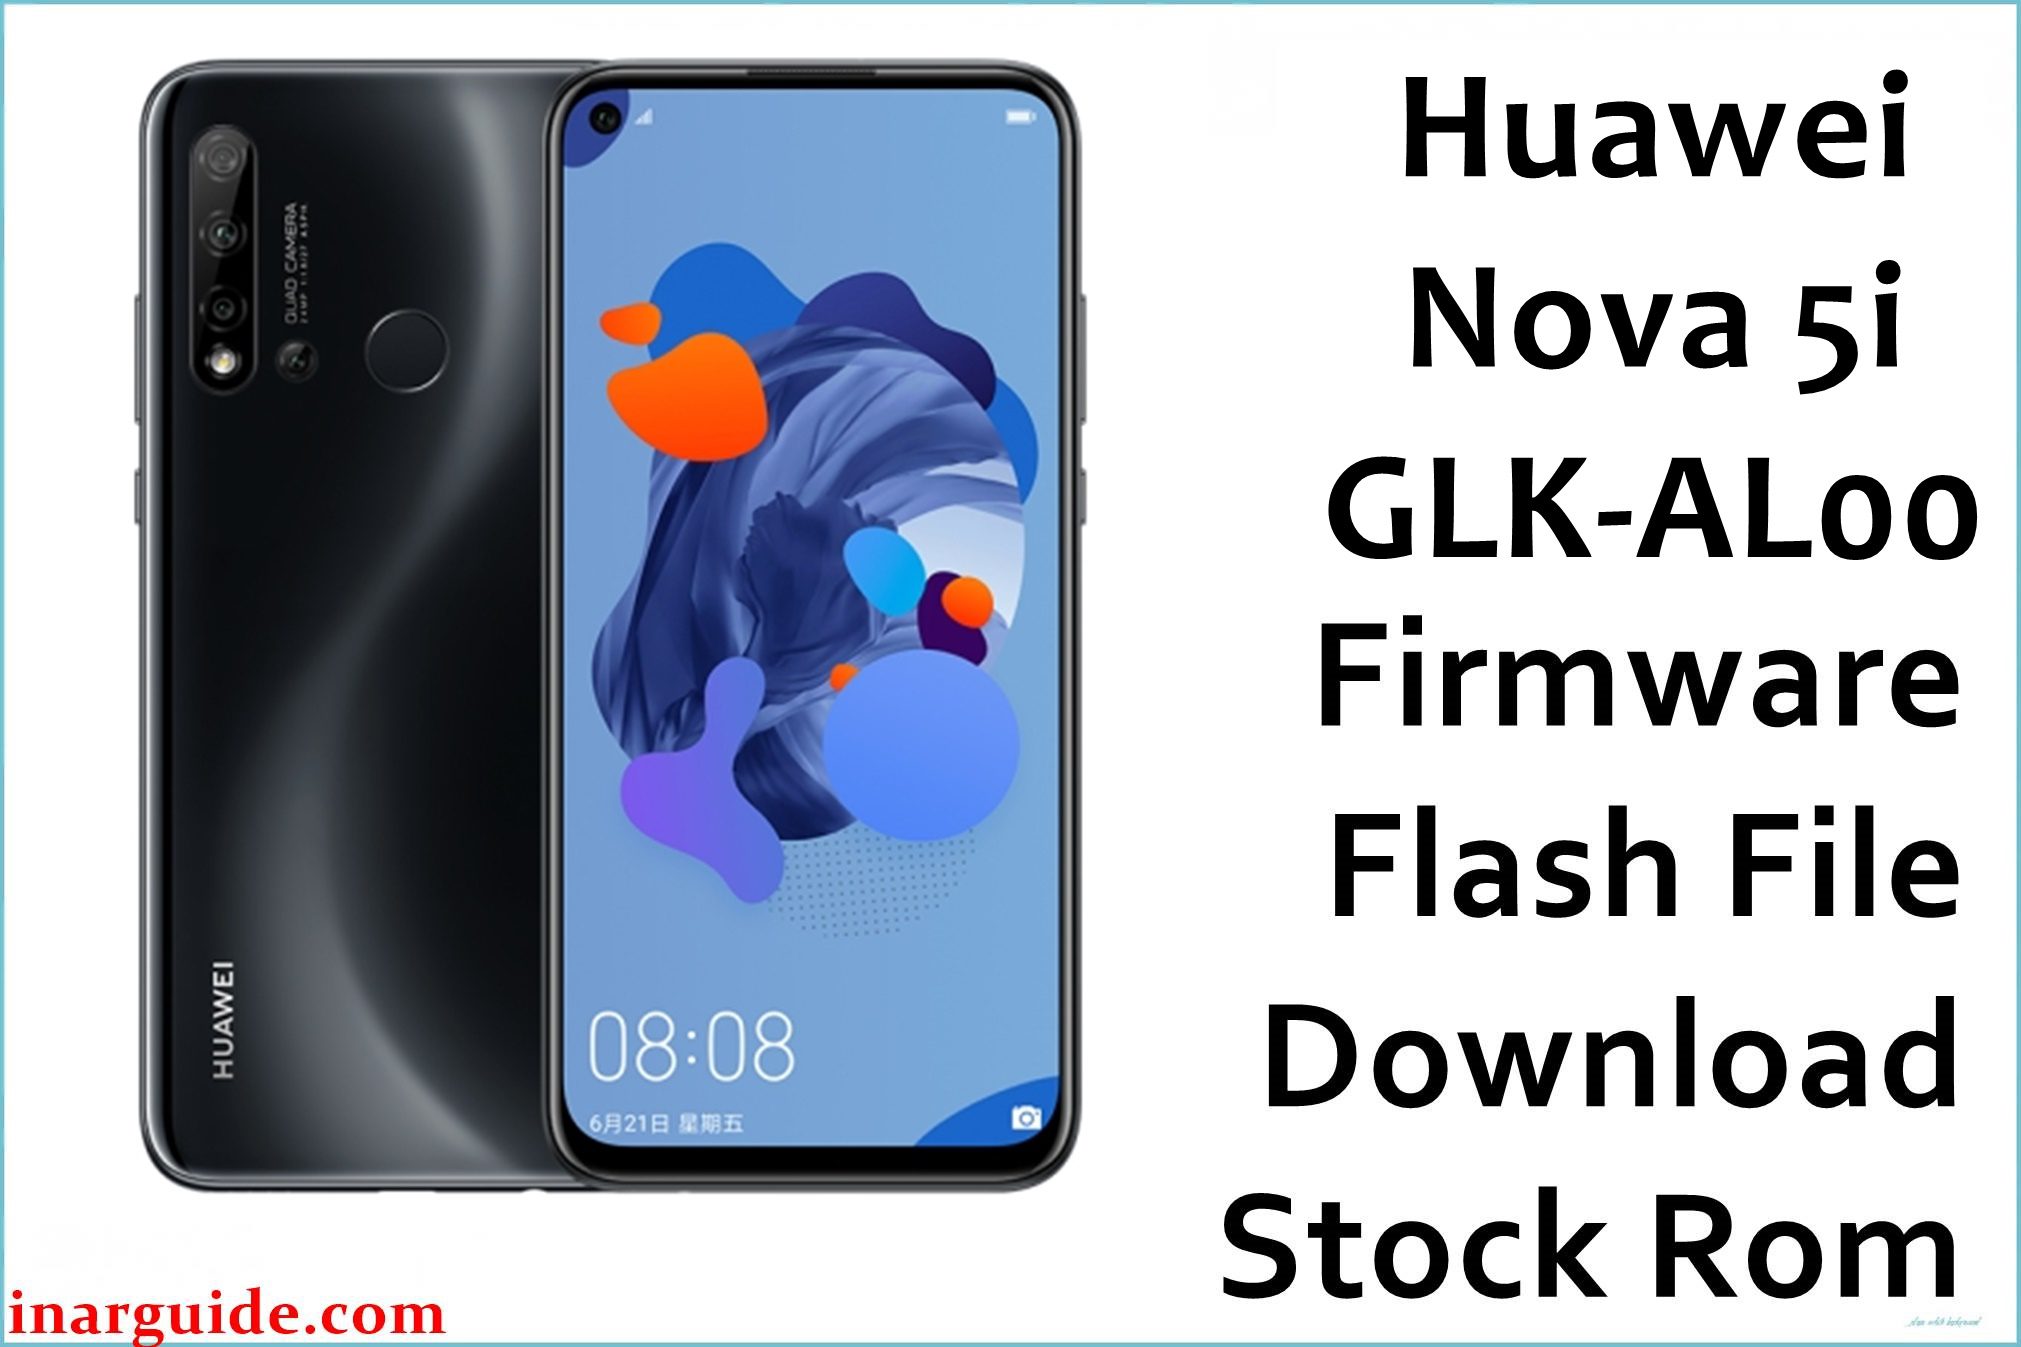 Huawei Nova 5i GLK AL00